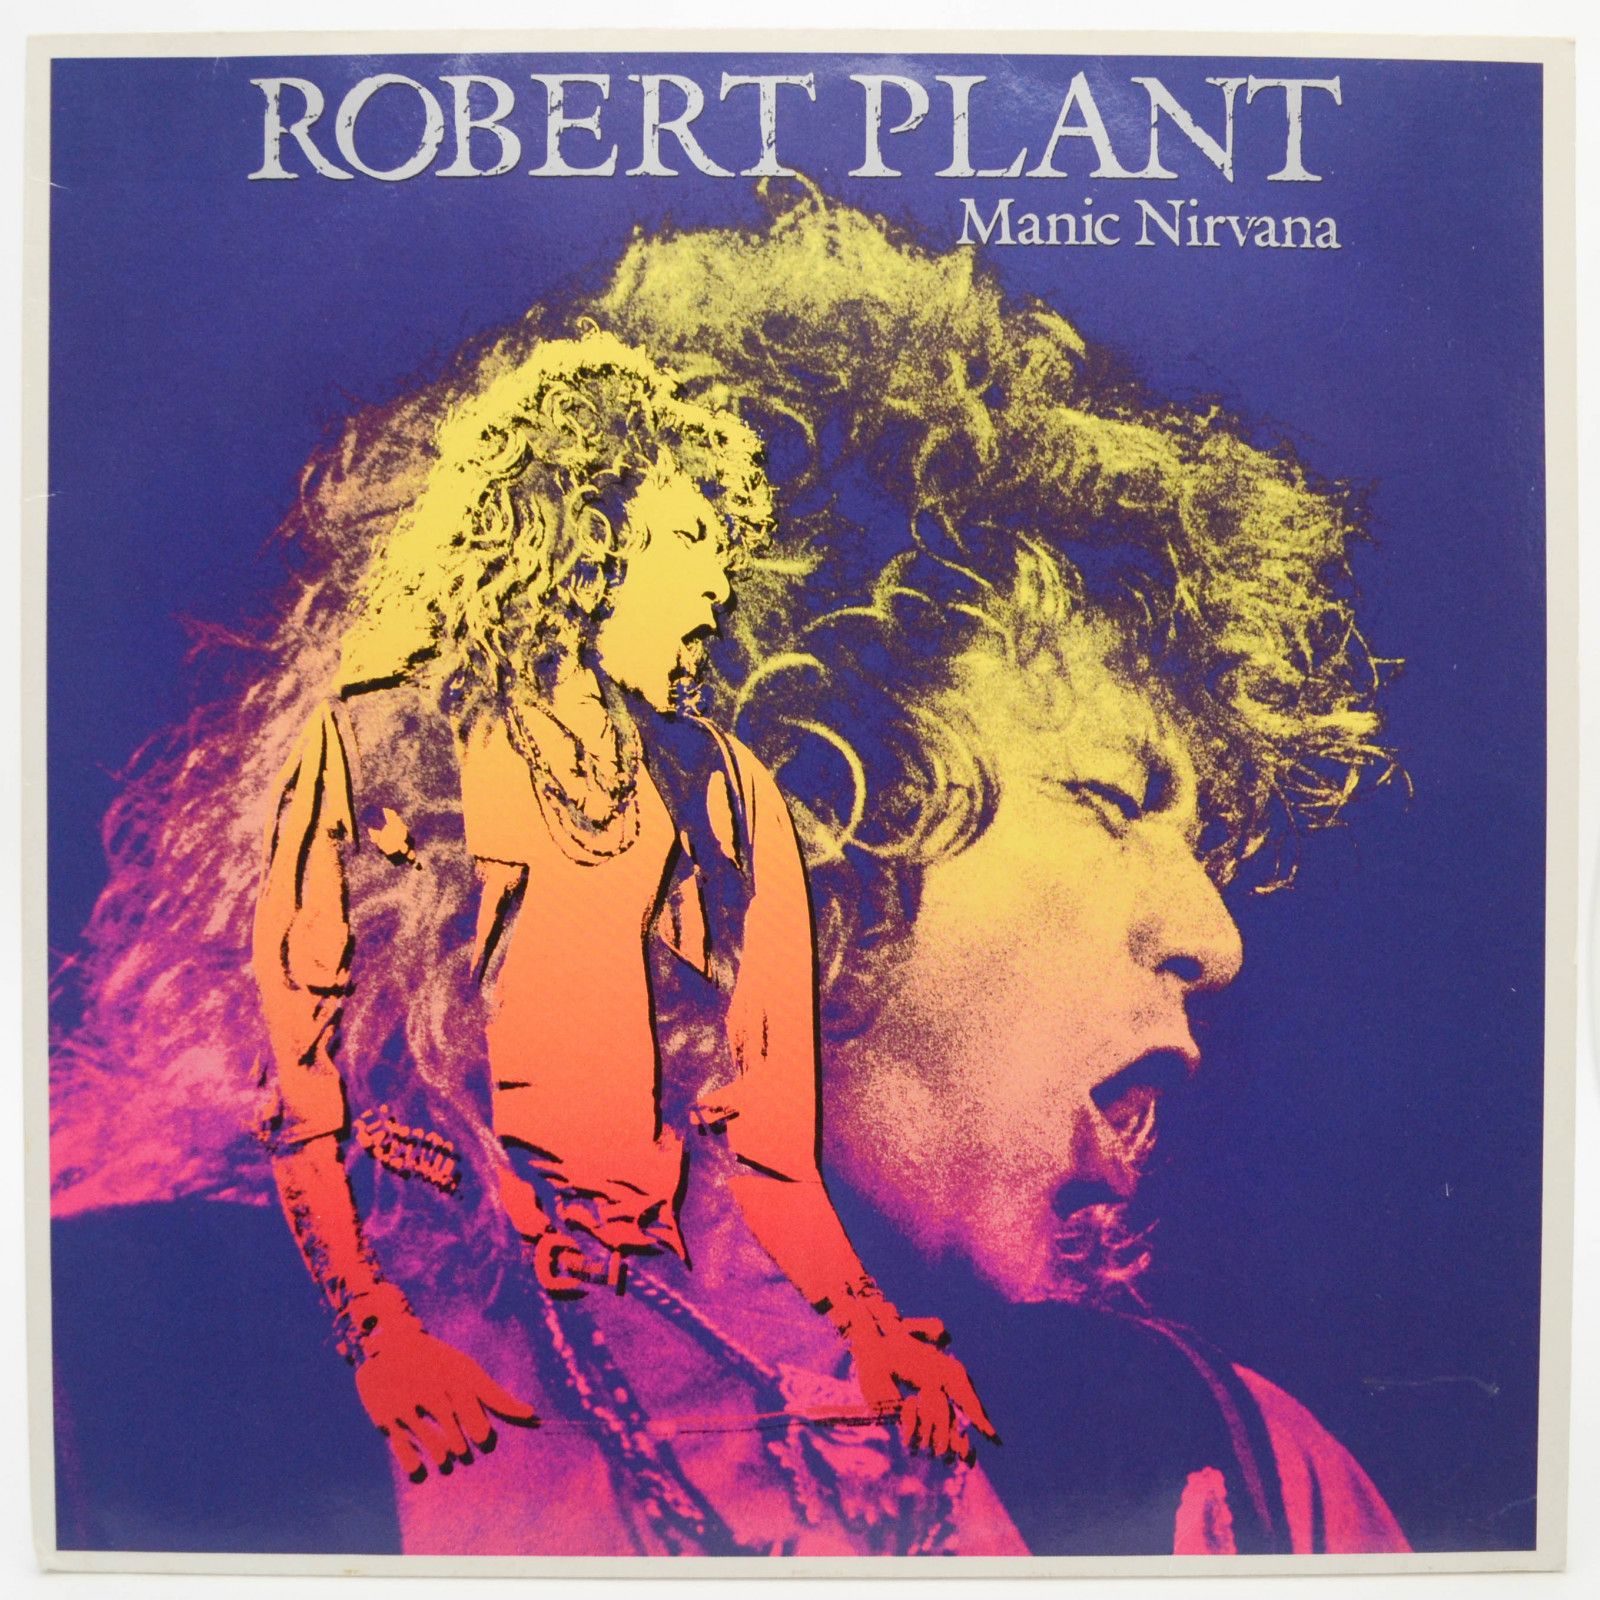 Big robert plant. Robert Plant Manic Nirvana 1990. Robert Plant 1990 Manic Nirvana фотоальбома. Robert Plant Manic Nirvana обложка.